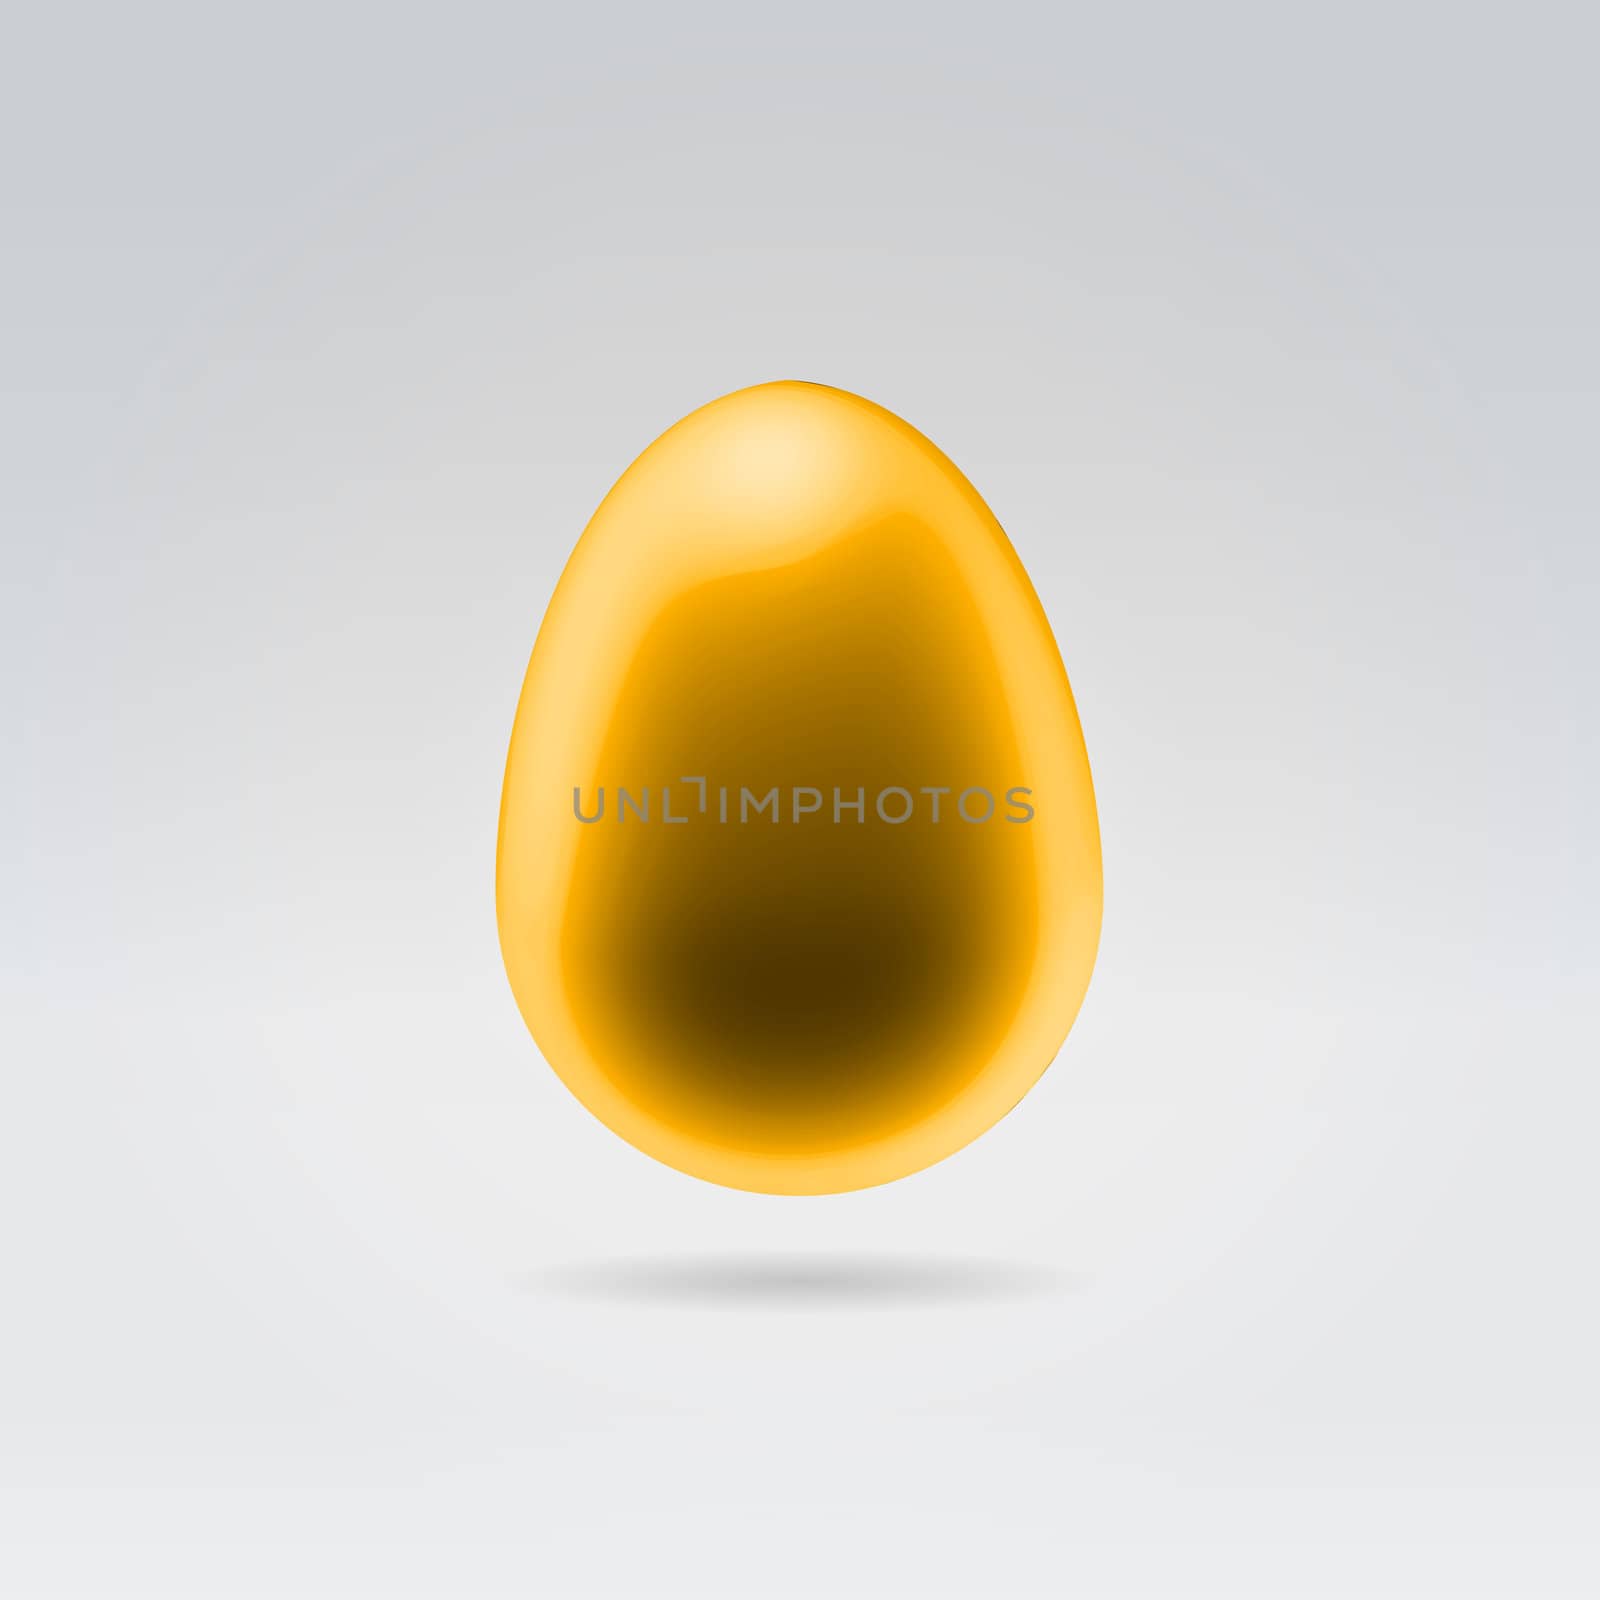 Pure golden egg hanging in space studio closeup illustration